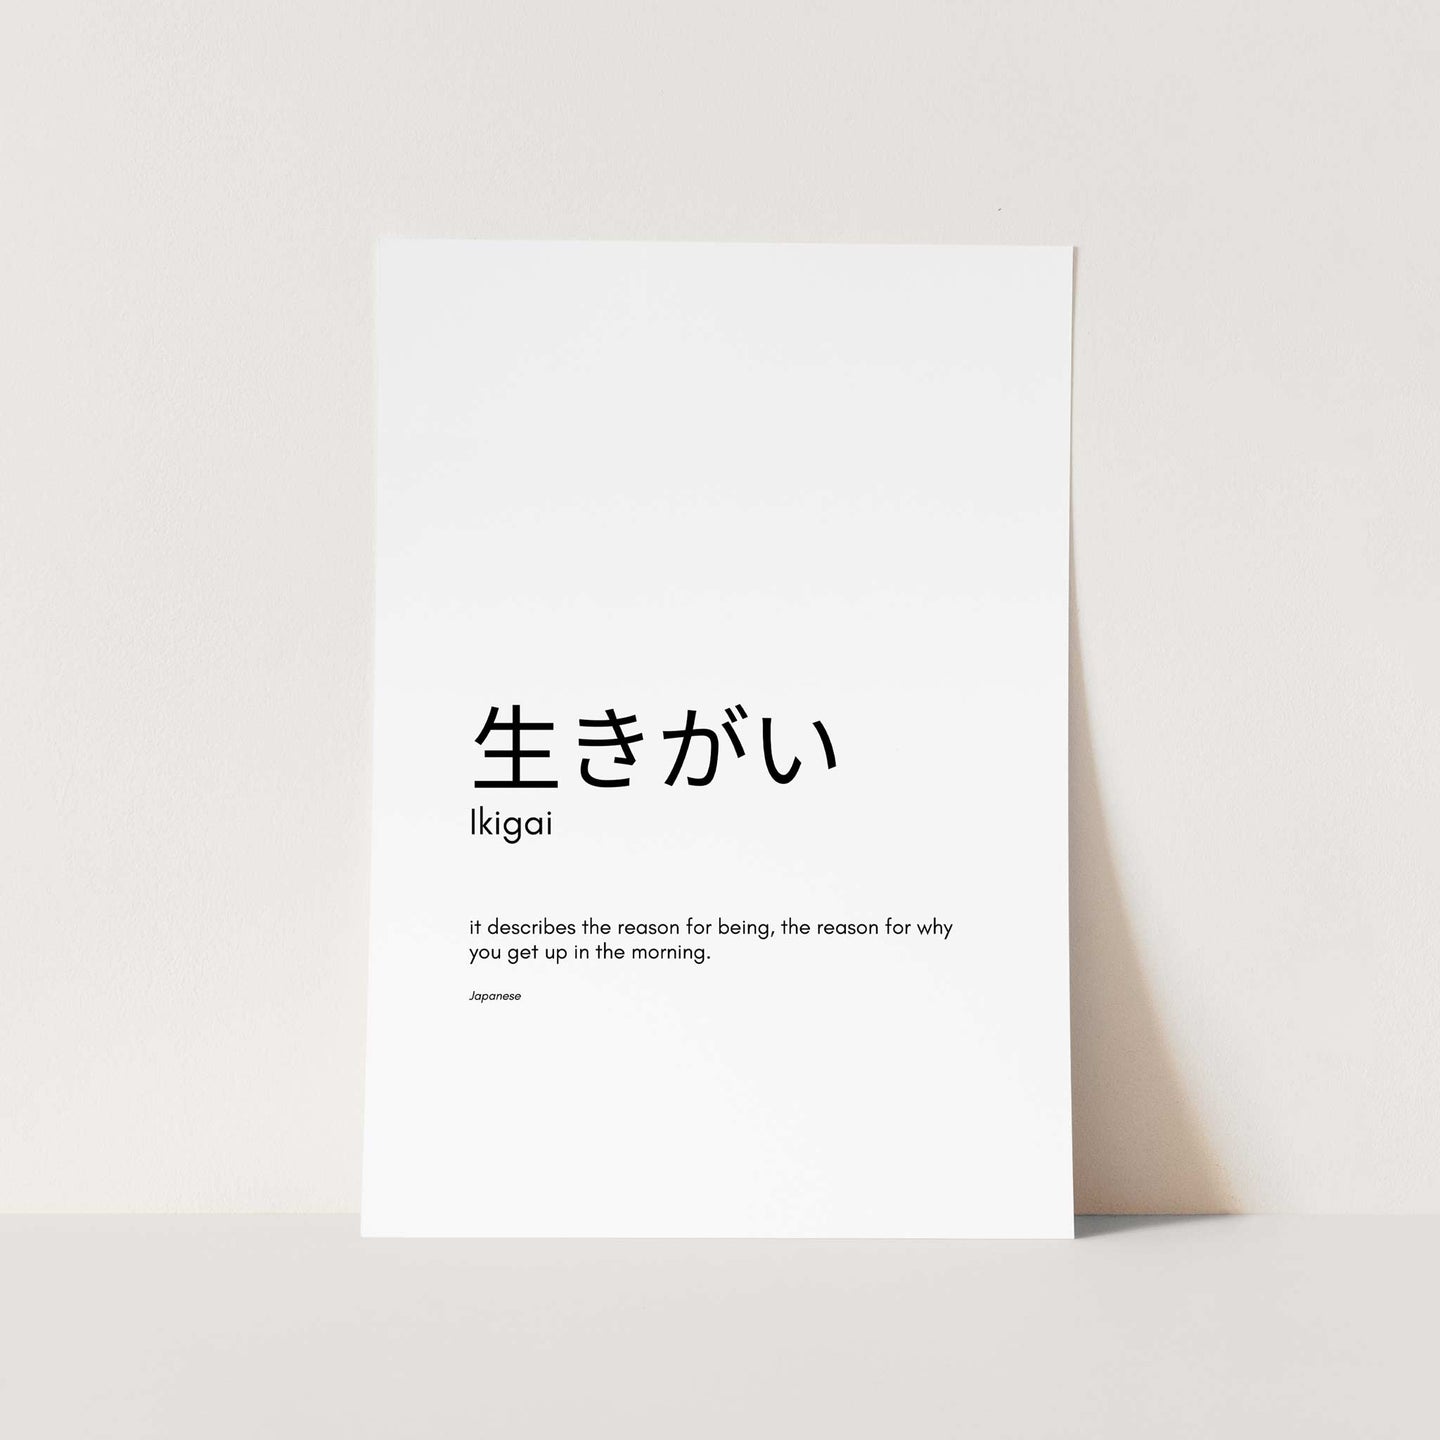 Ikigai Japanese Text Art Print